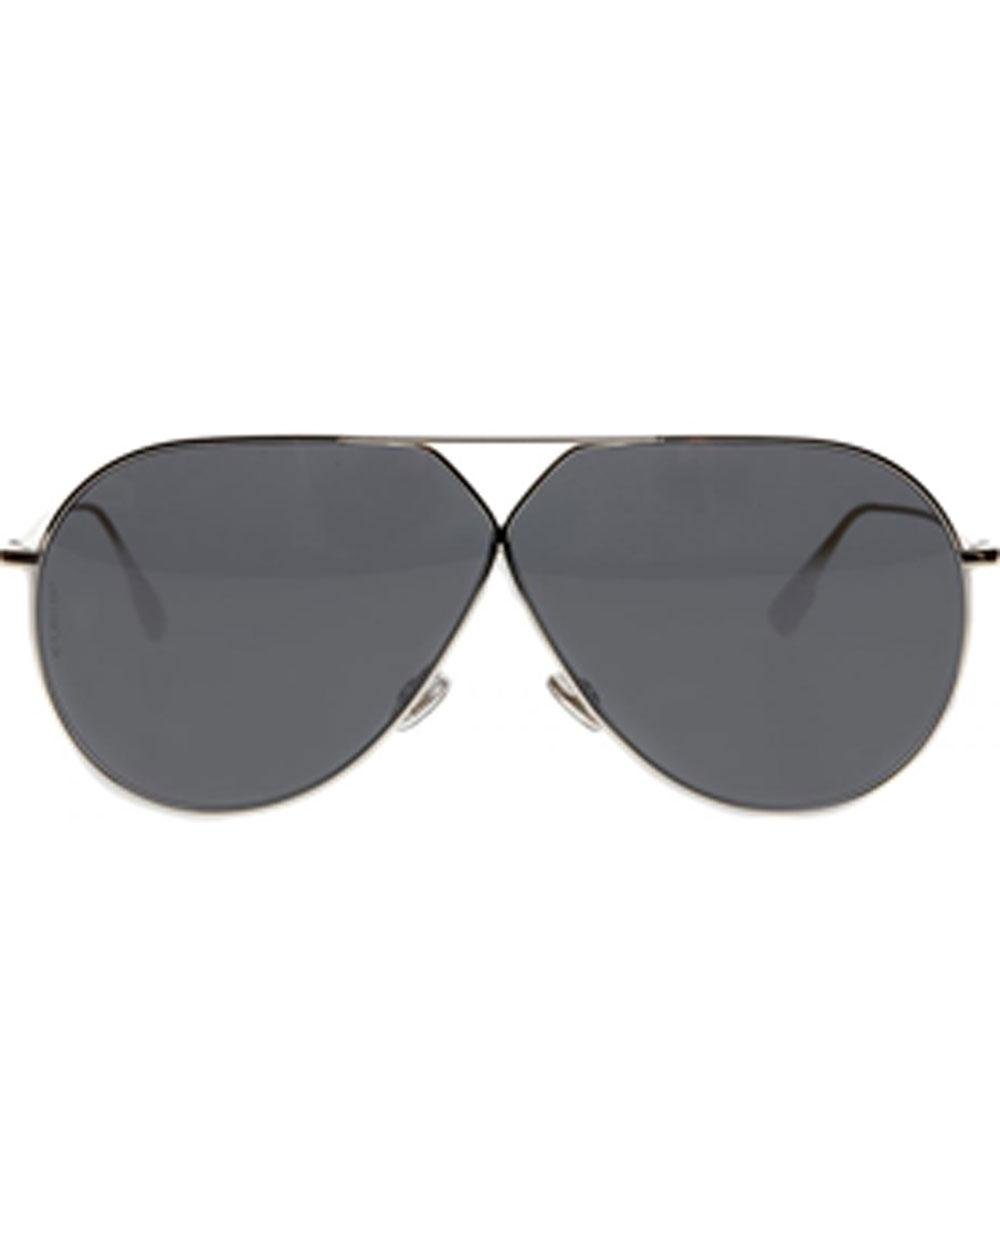 Dior Stellaire 3 Sunglasses in Black - Lyst